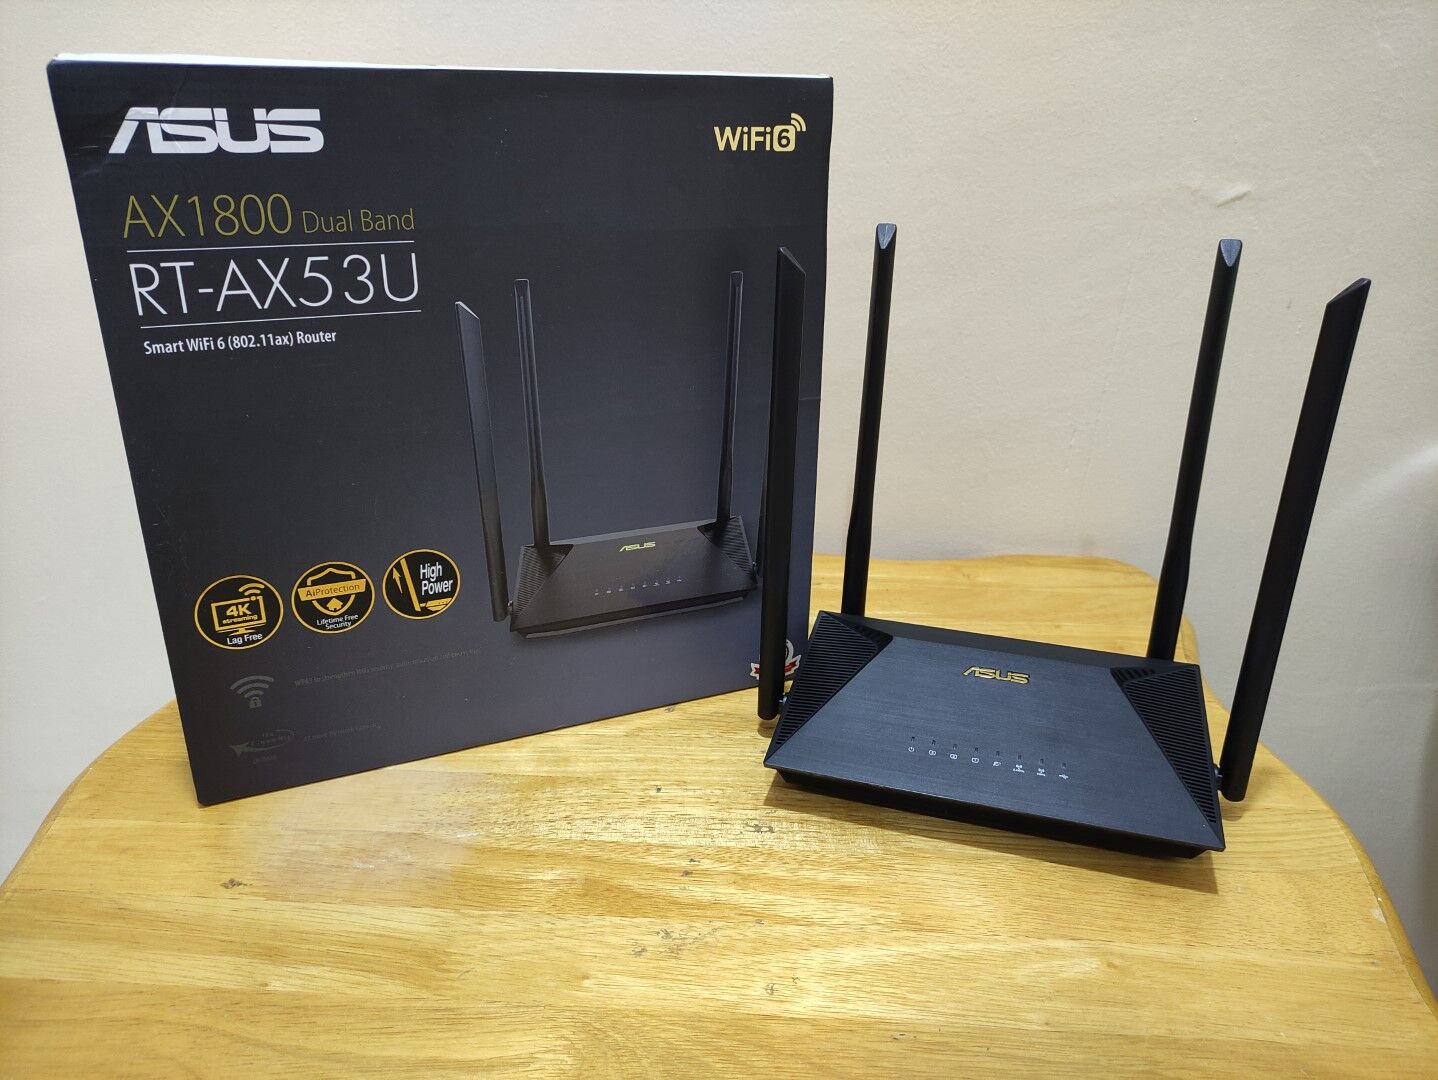 ASUS RT-AX53U AX1800 Dual Band Router Review 31